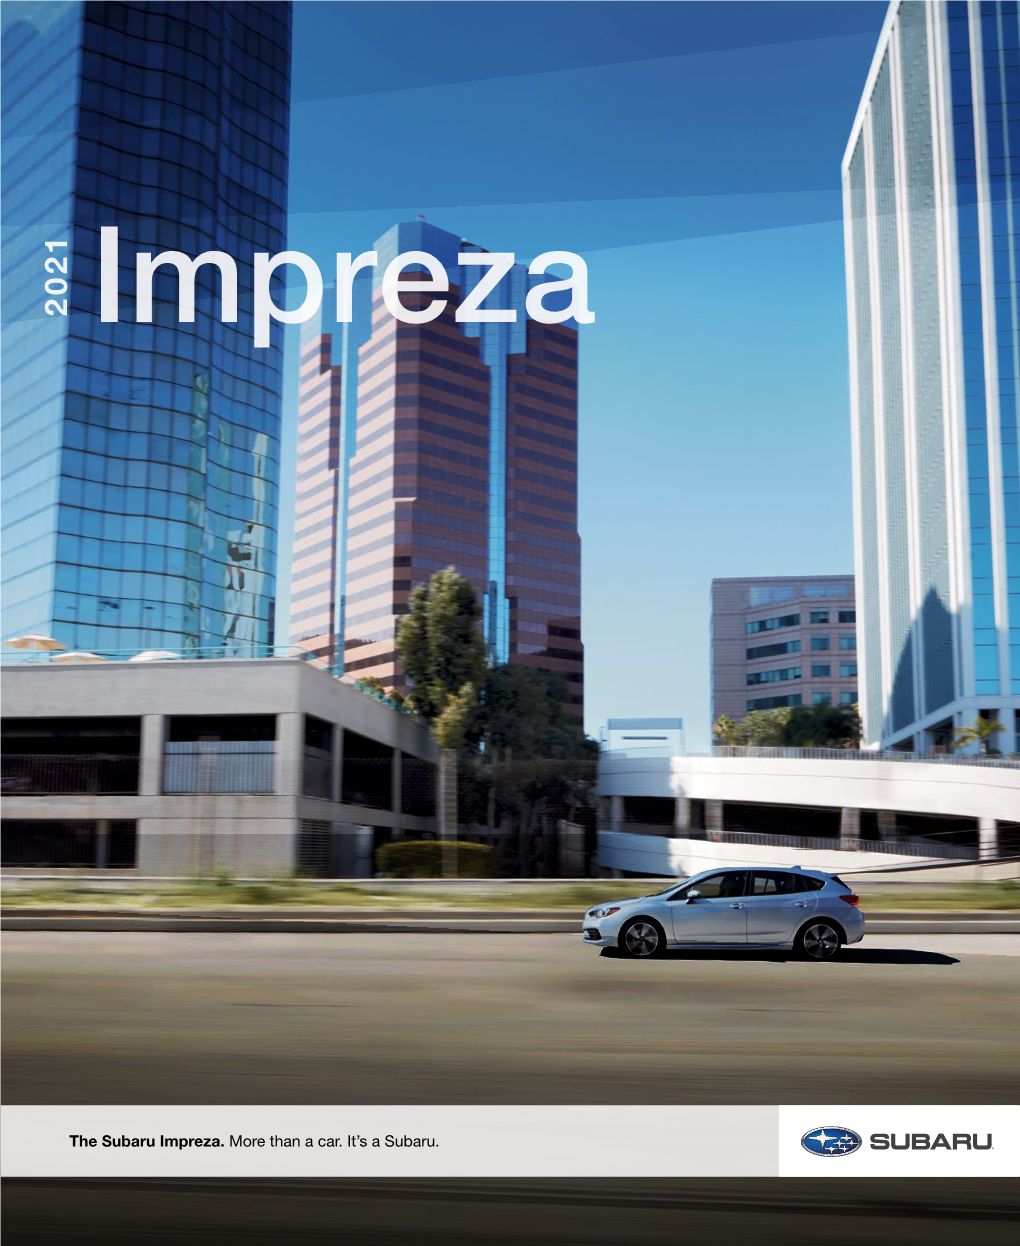 2021 Impreza E-Brochure